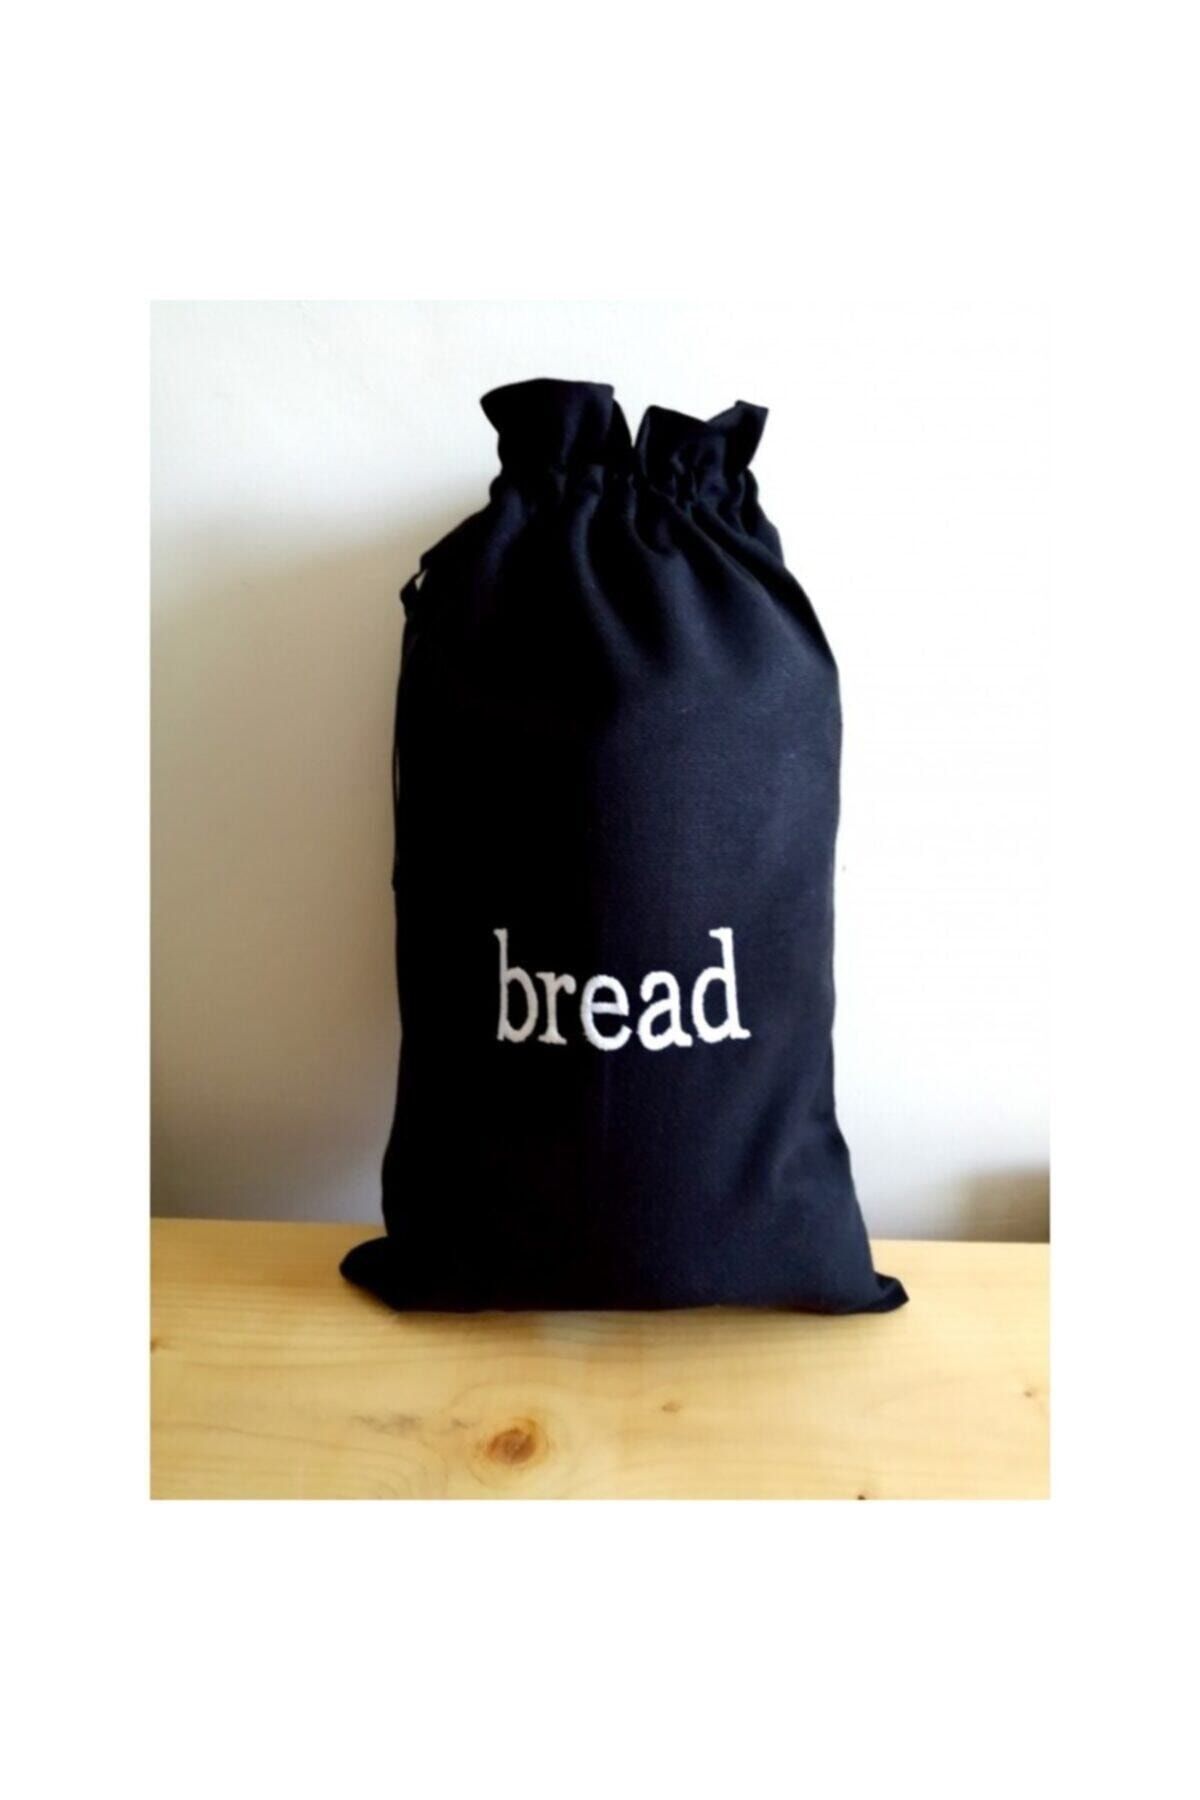 Atölye No 35 Essentials Siyah Bread Ekmek Kesesi Ekmeklik